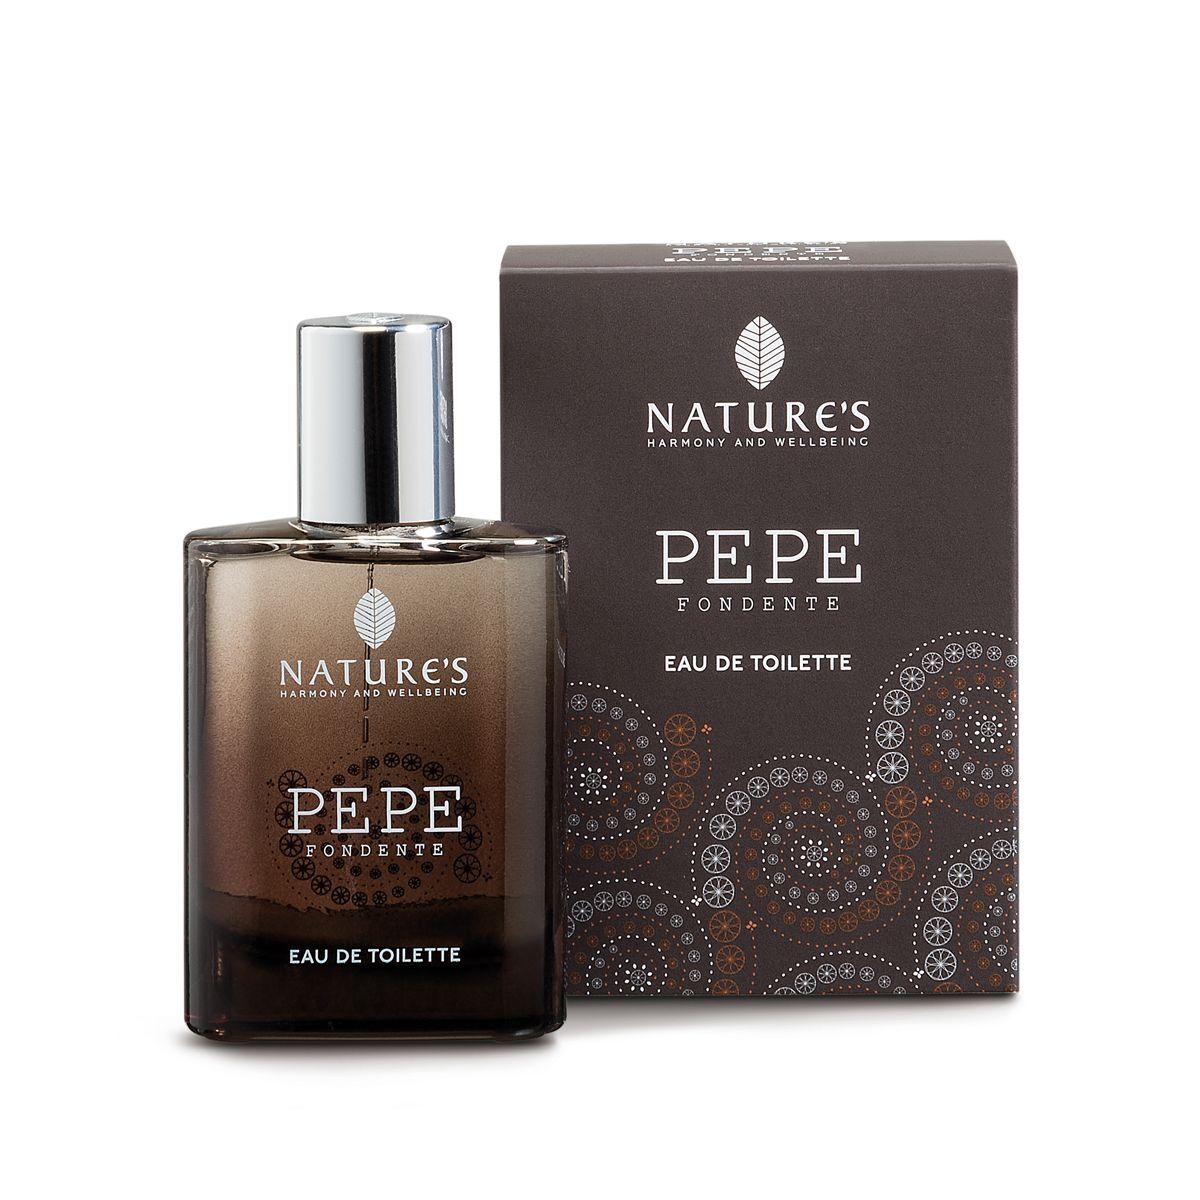 Nature's Pepe Fondente Eau de Toilette (50 ml)